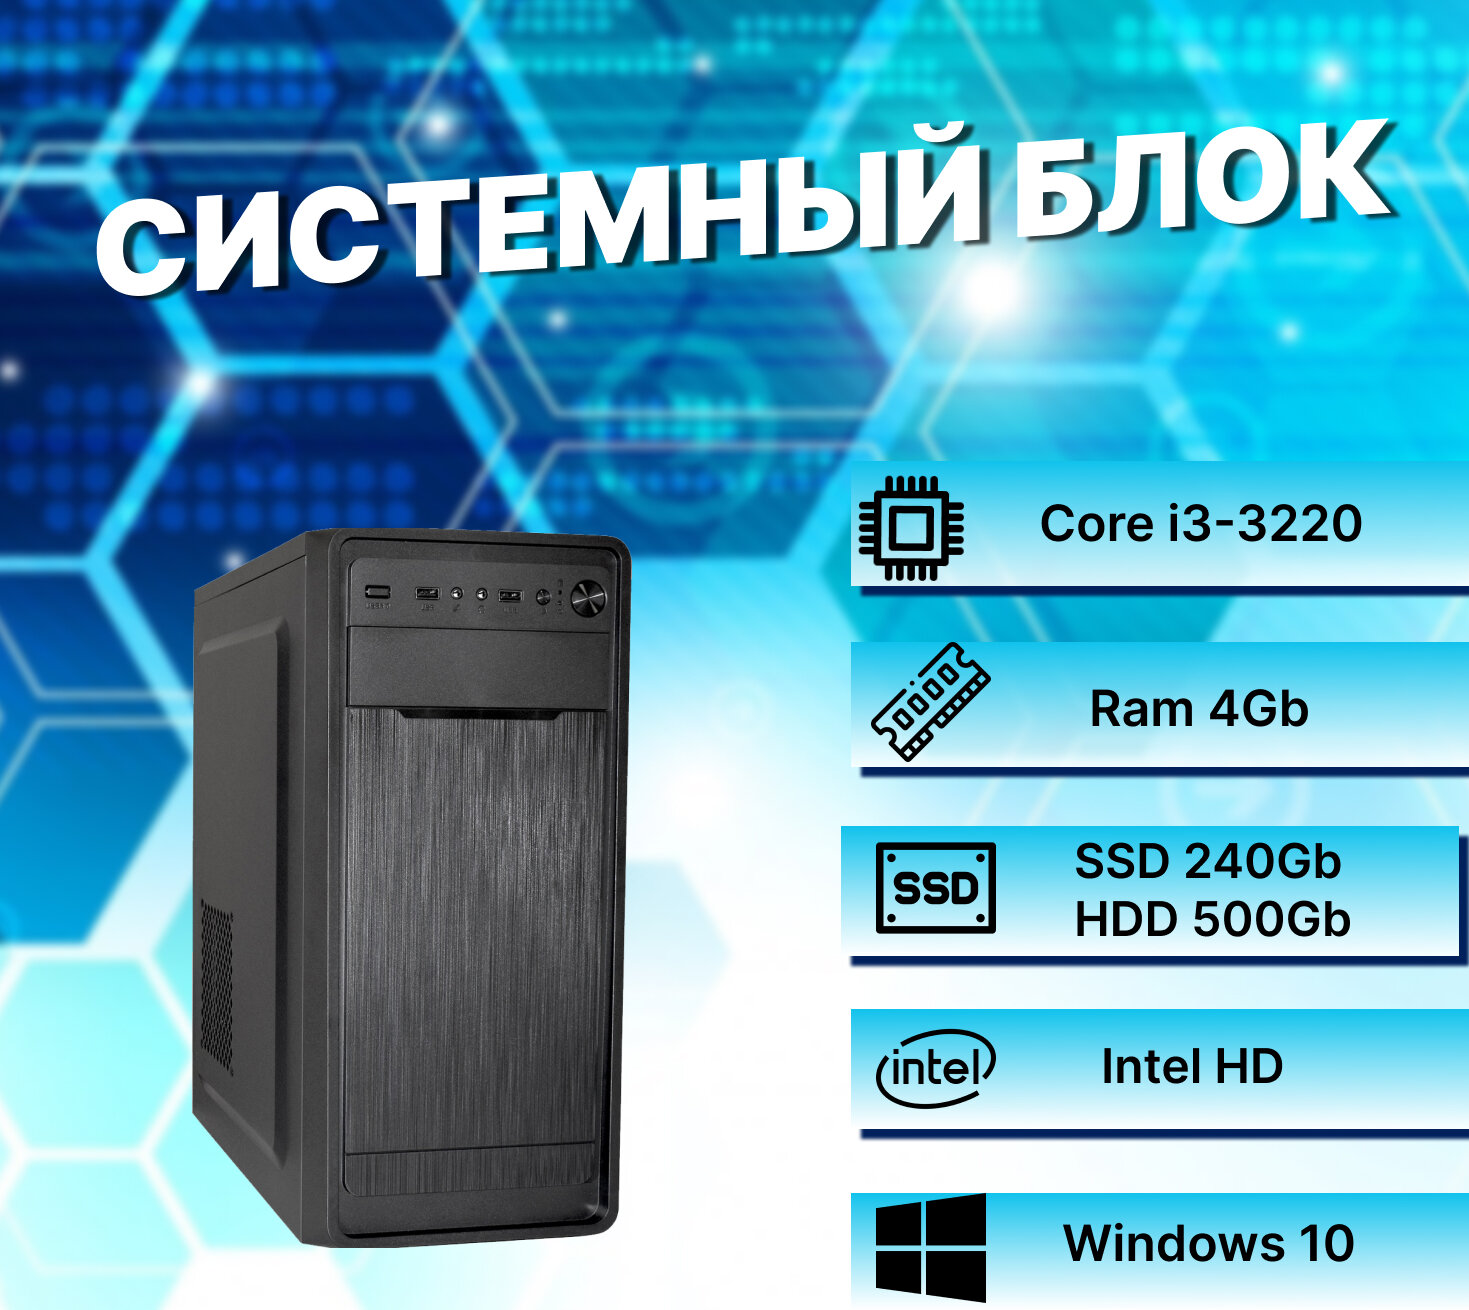 Системный блок Intel Core I3-3220 (3.4ГГц)/ RAM 4Gb/ SSD 240Gb/ HDD 500Gb/ Intel HD/ Windows 10 Pro